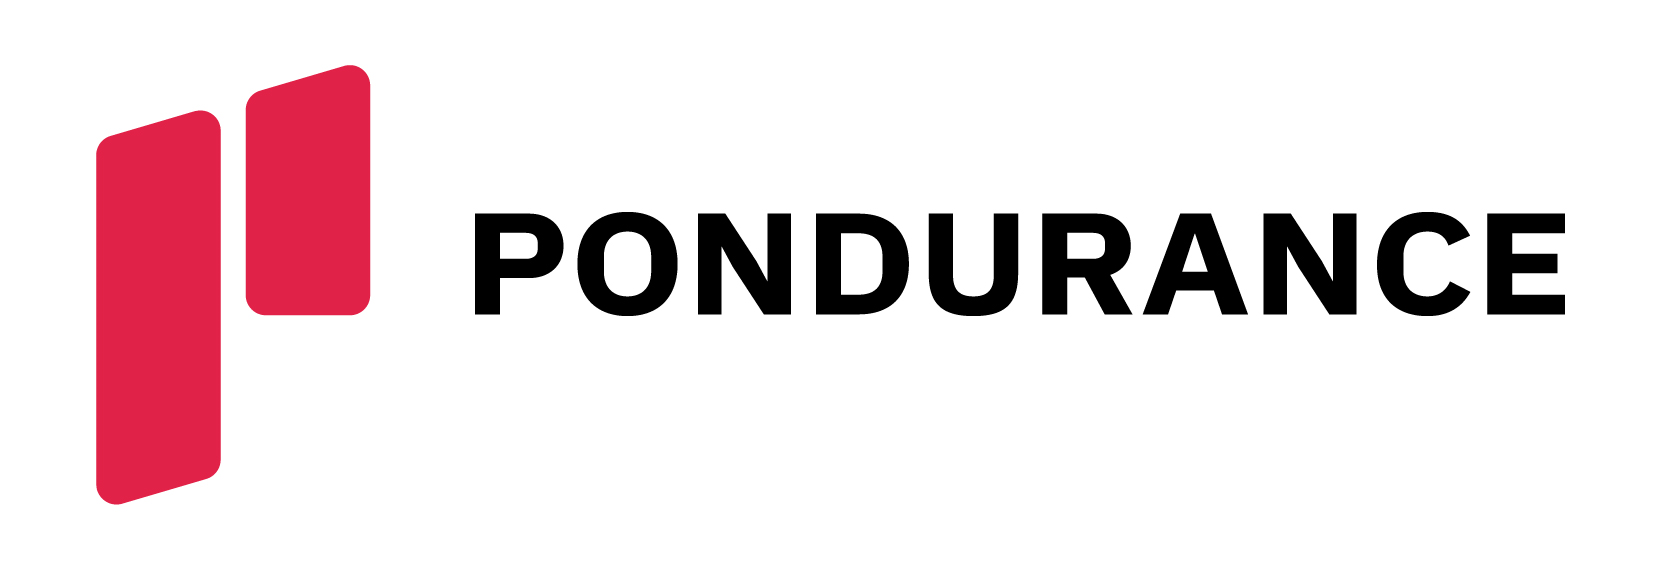 Pondurance Company Logo